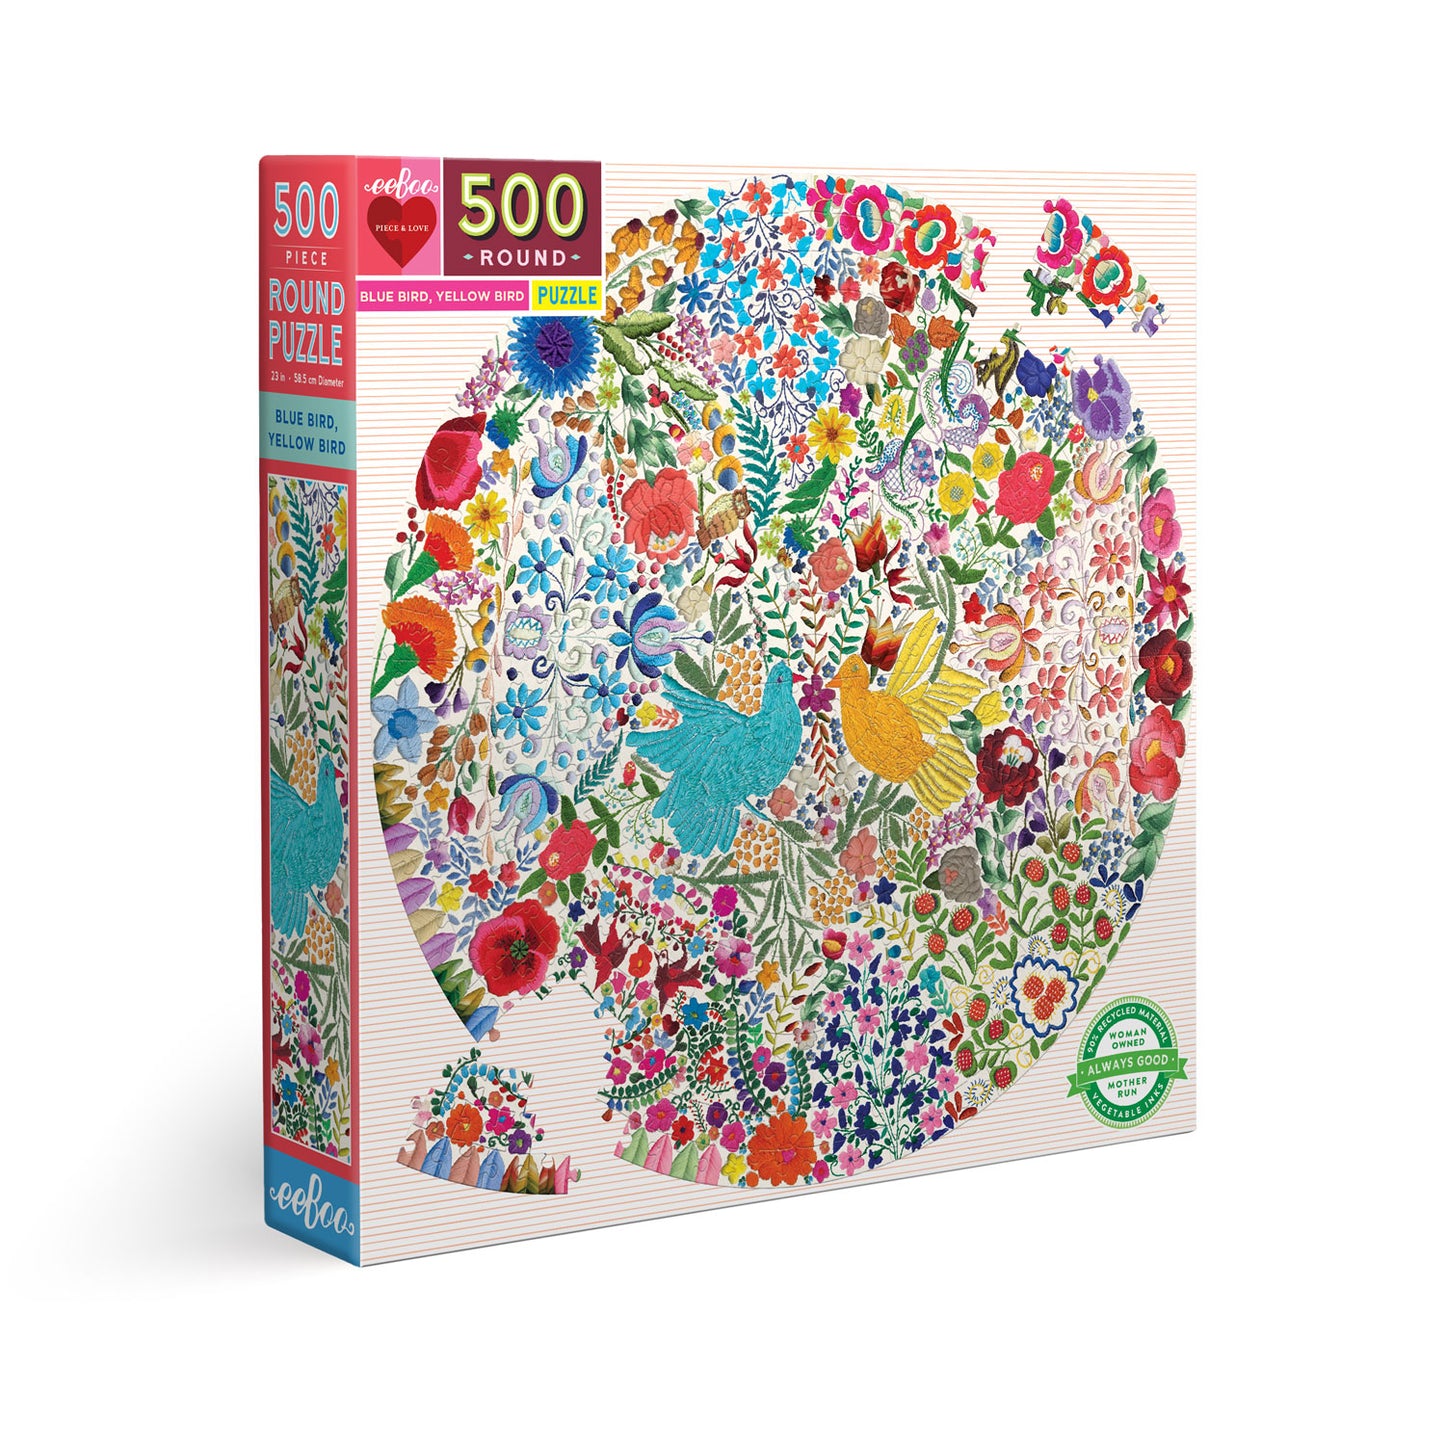 eeBoo 500 Piece Jigsaw Puzzle - Blue Bird Yellow Bird